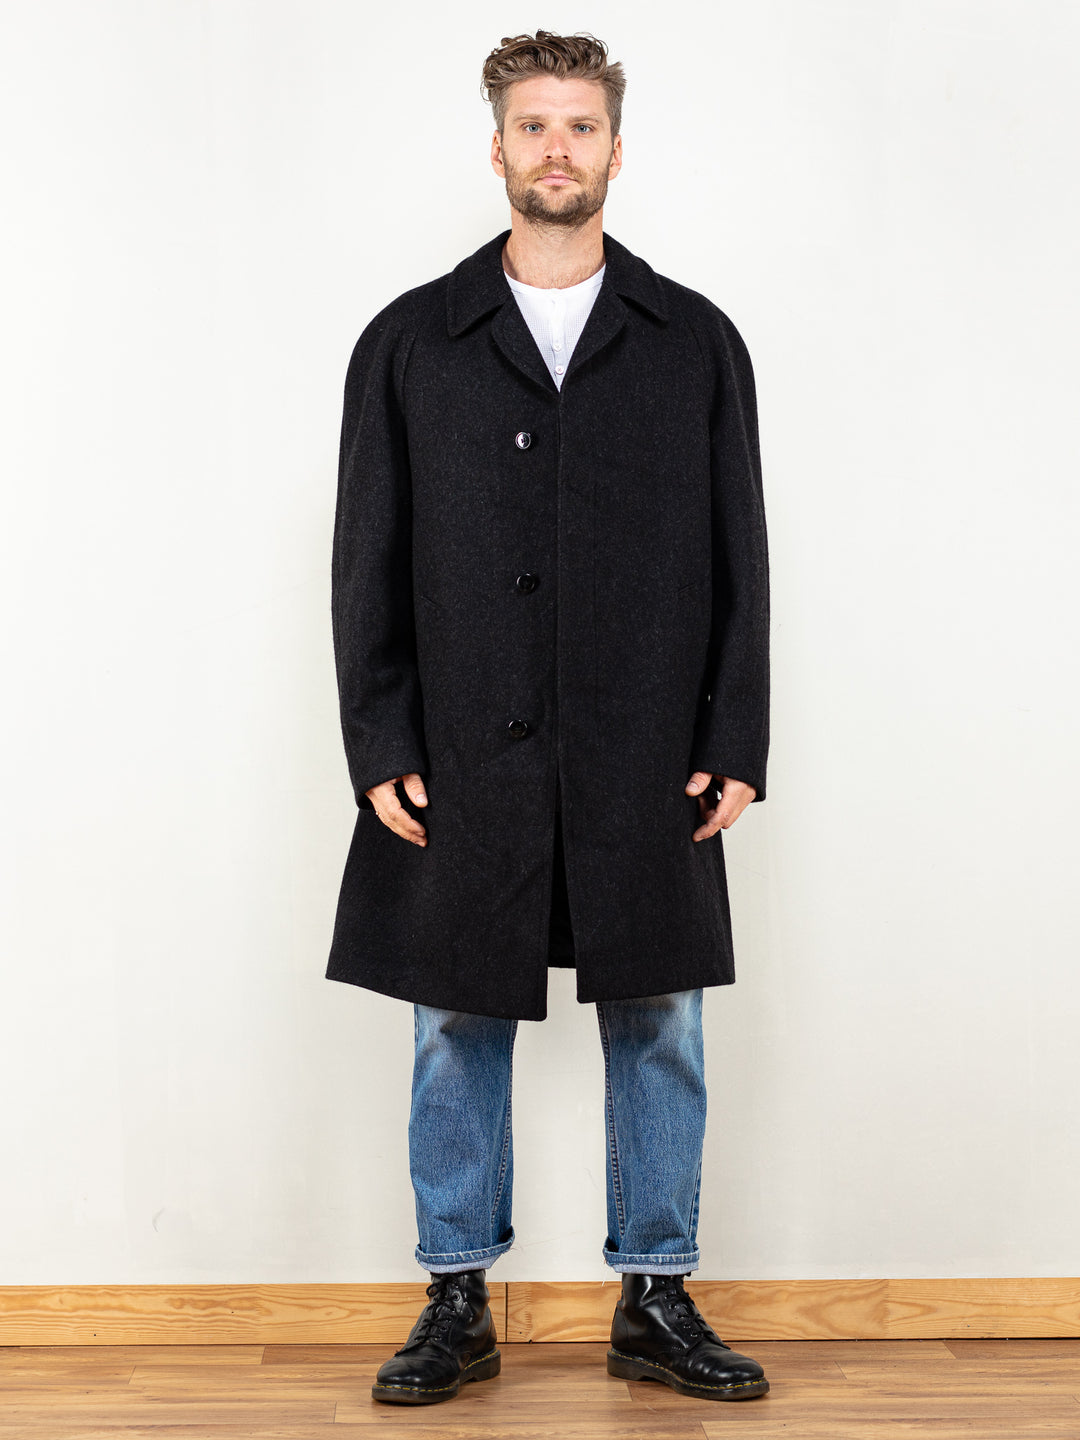 Men Wool Coat 70s dark grey pure wool overcoat classy vintage men retro 70s clothing classic men minimalistic style outerwear size large